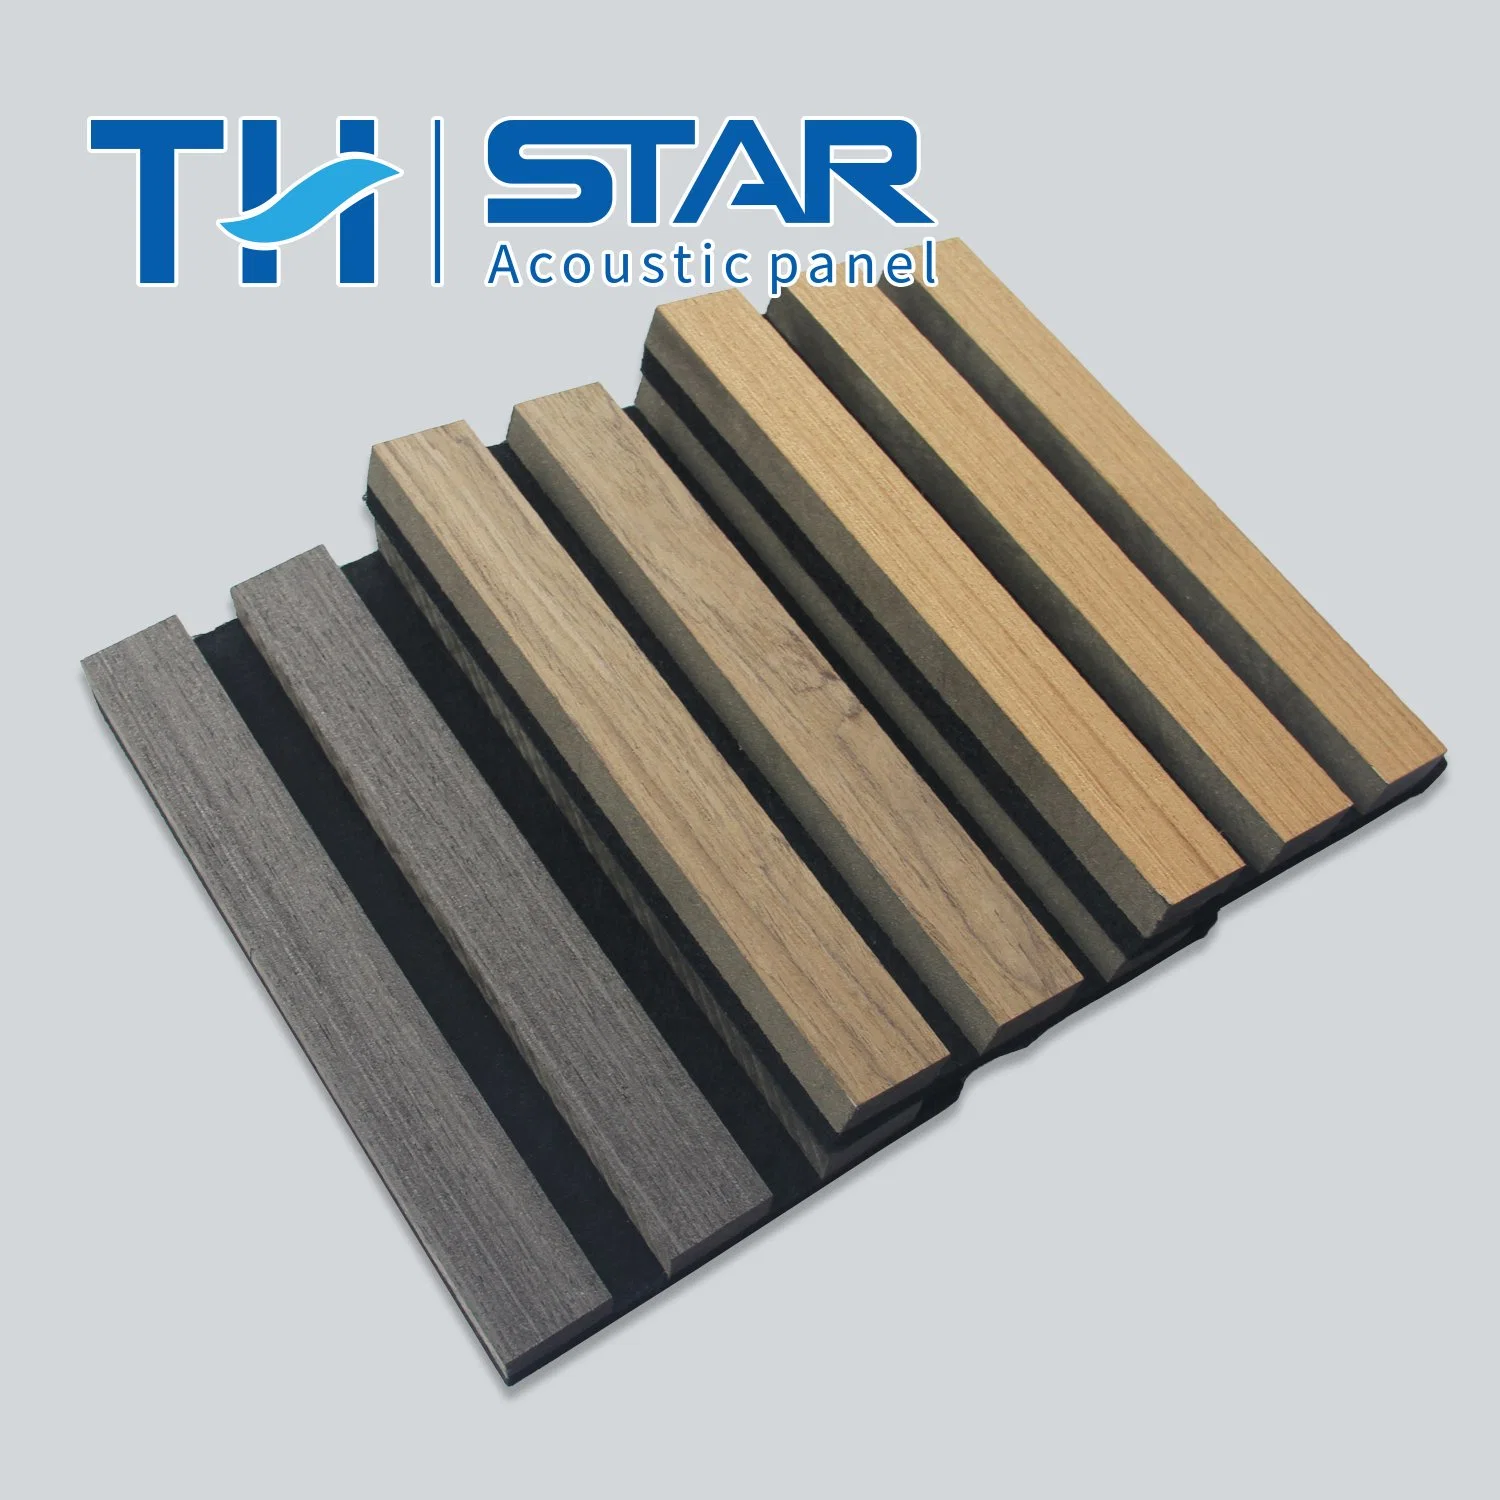 Light Wood Color Akupanel Wooden Slats Wall Sound Absorption Acoustic Panel